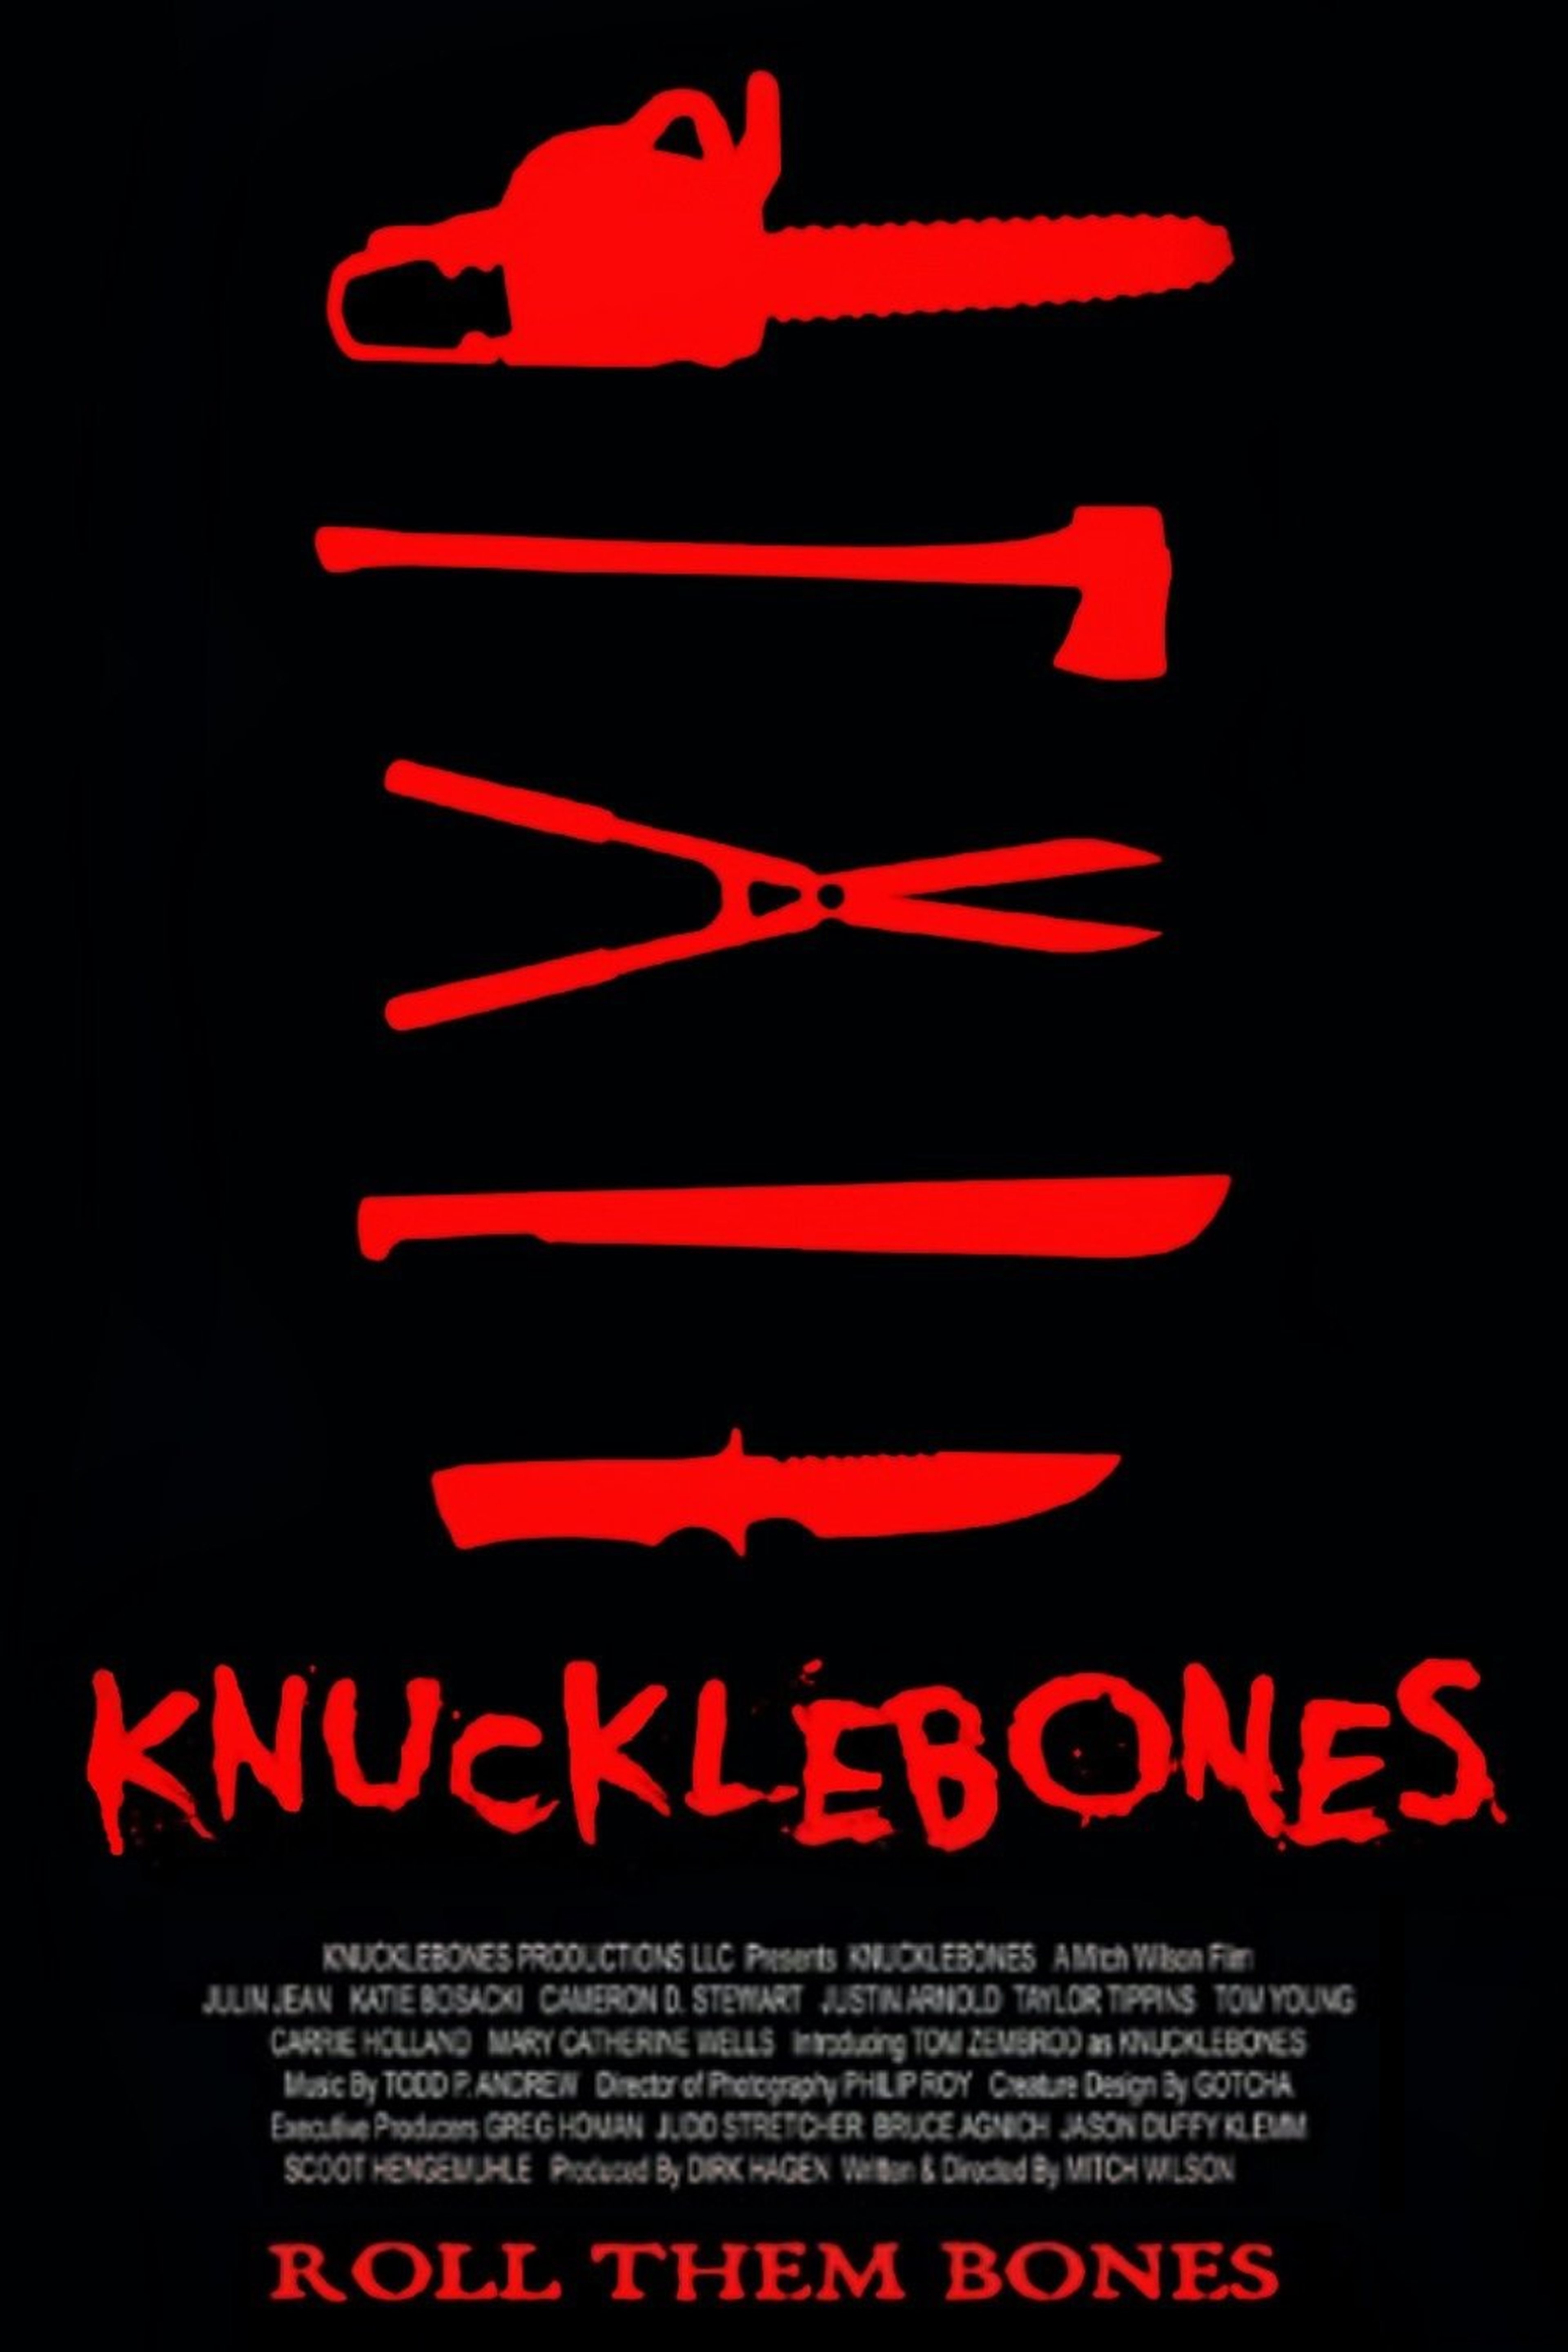 Knucklebones